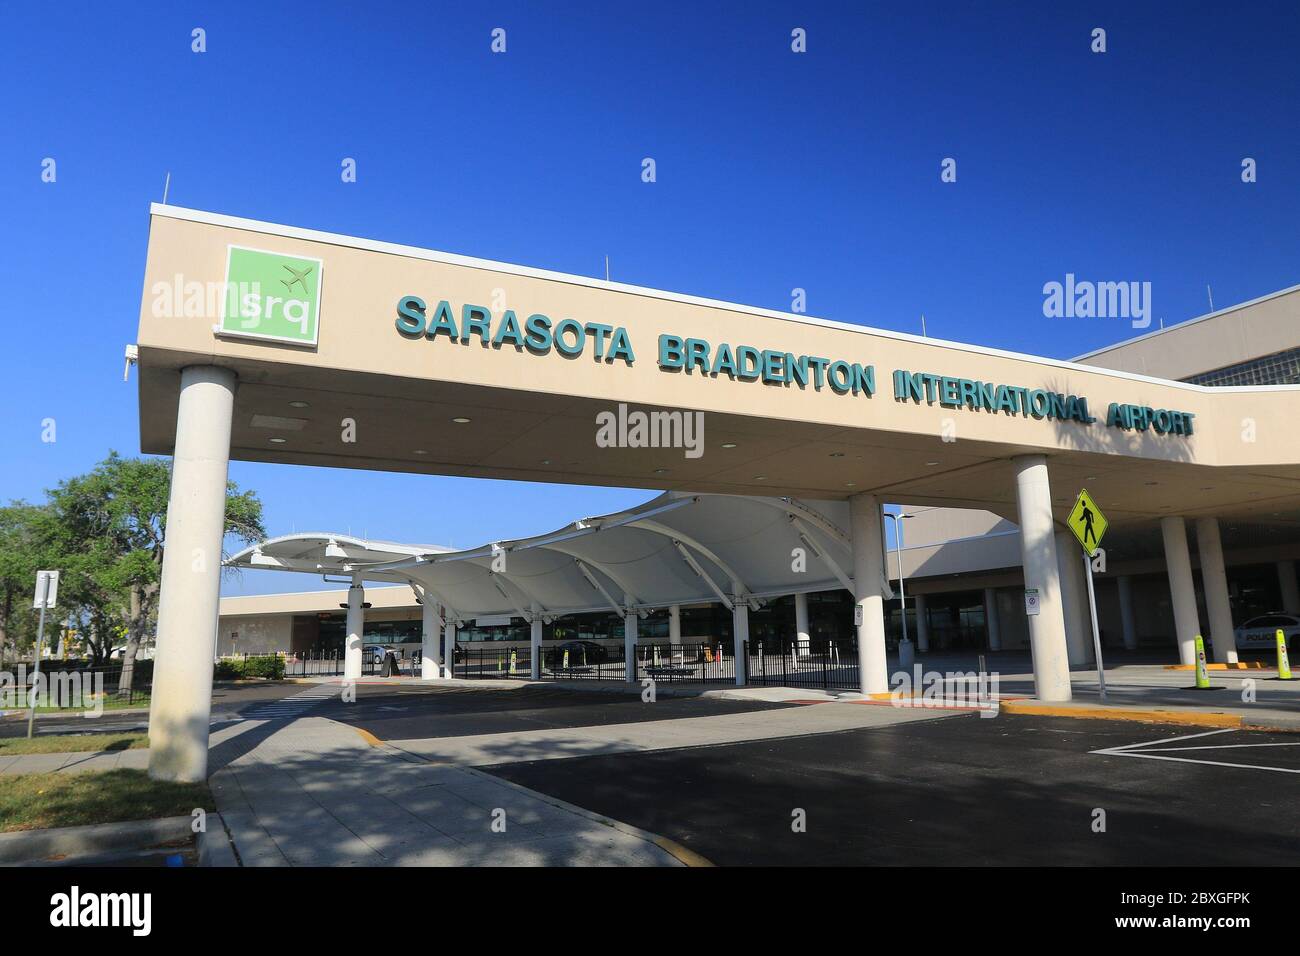 Sarasota, FL, 3/28/2020: View of the main entrance to the Sarasota Bradenton international airport's terminal. Stock Photo